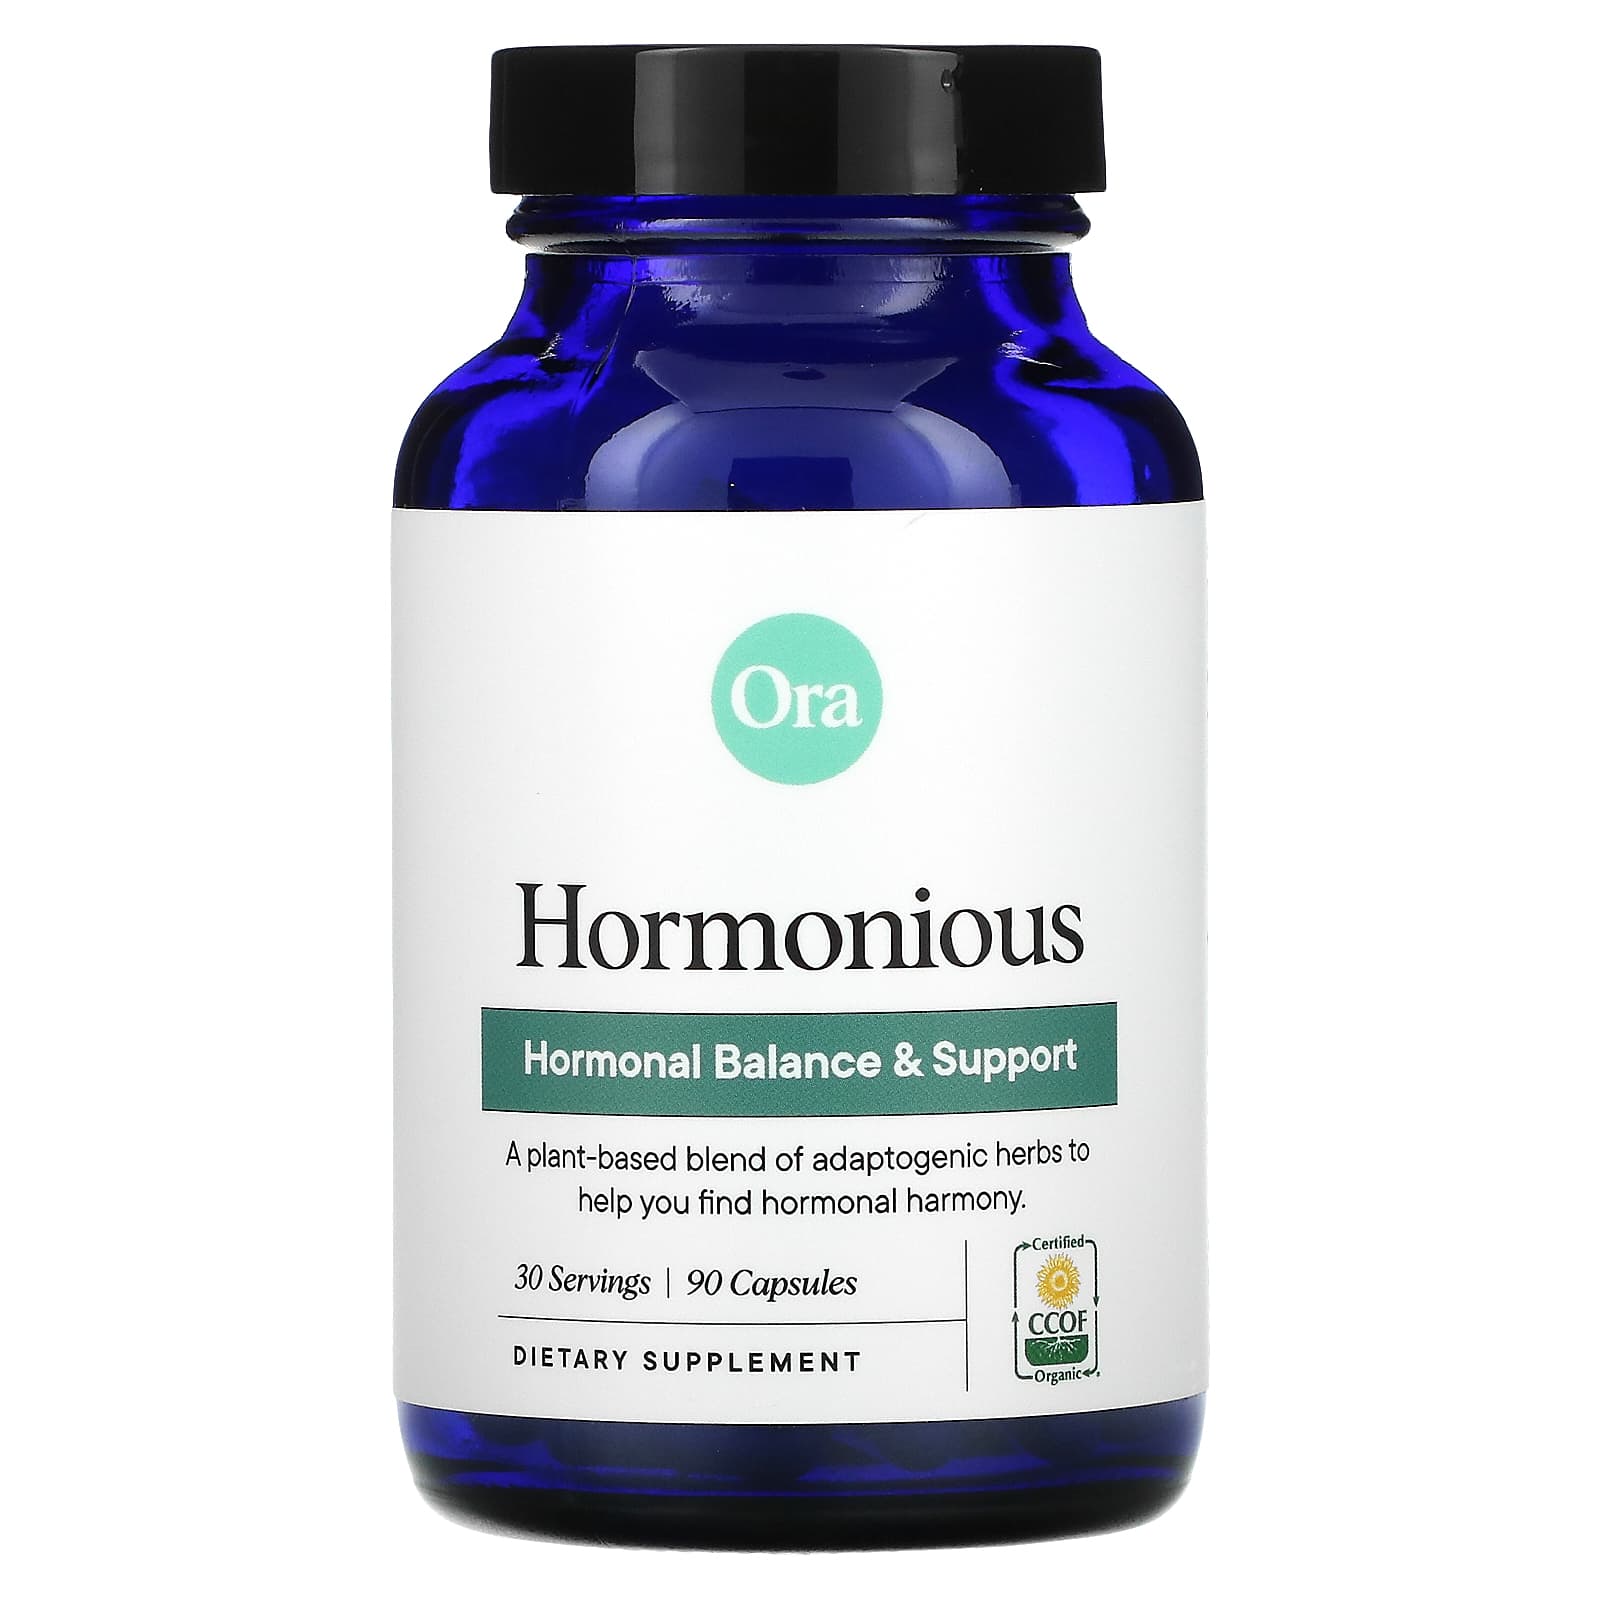 Hormonal balance supplement